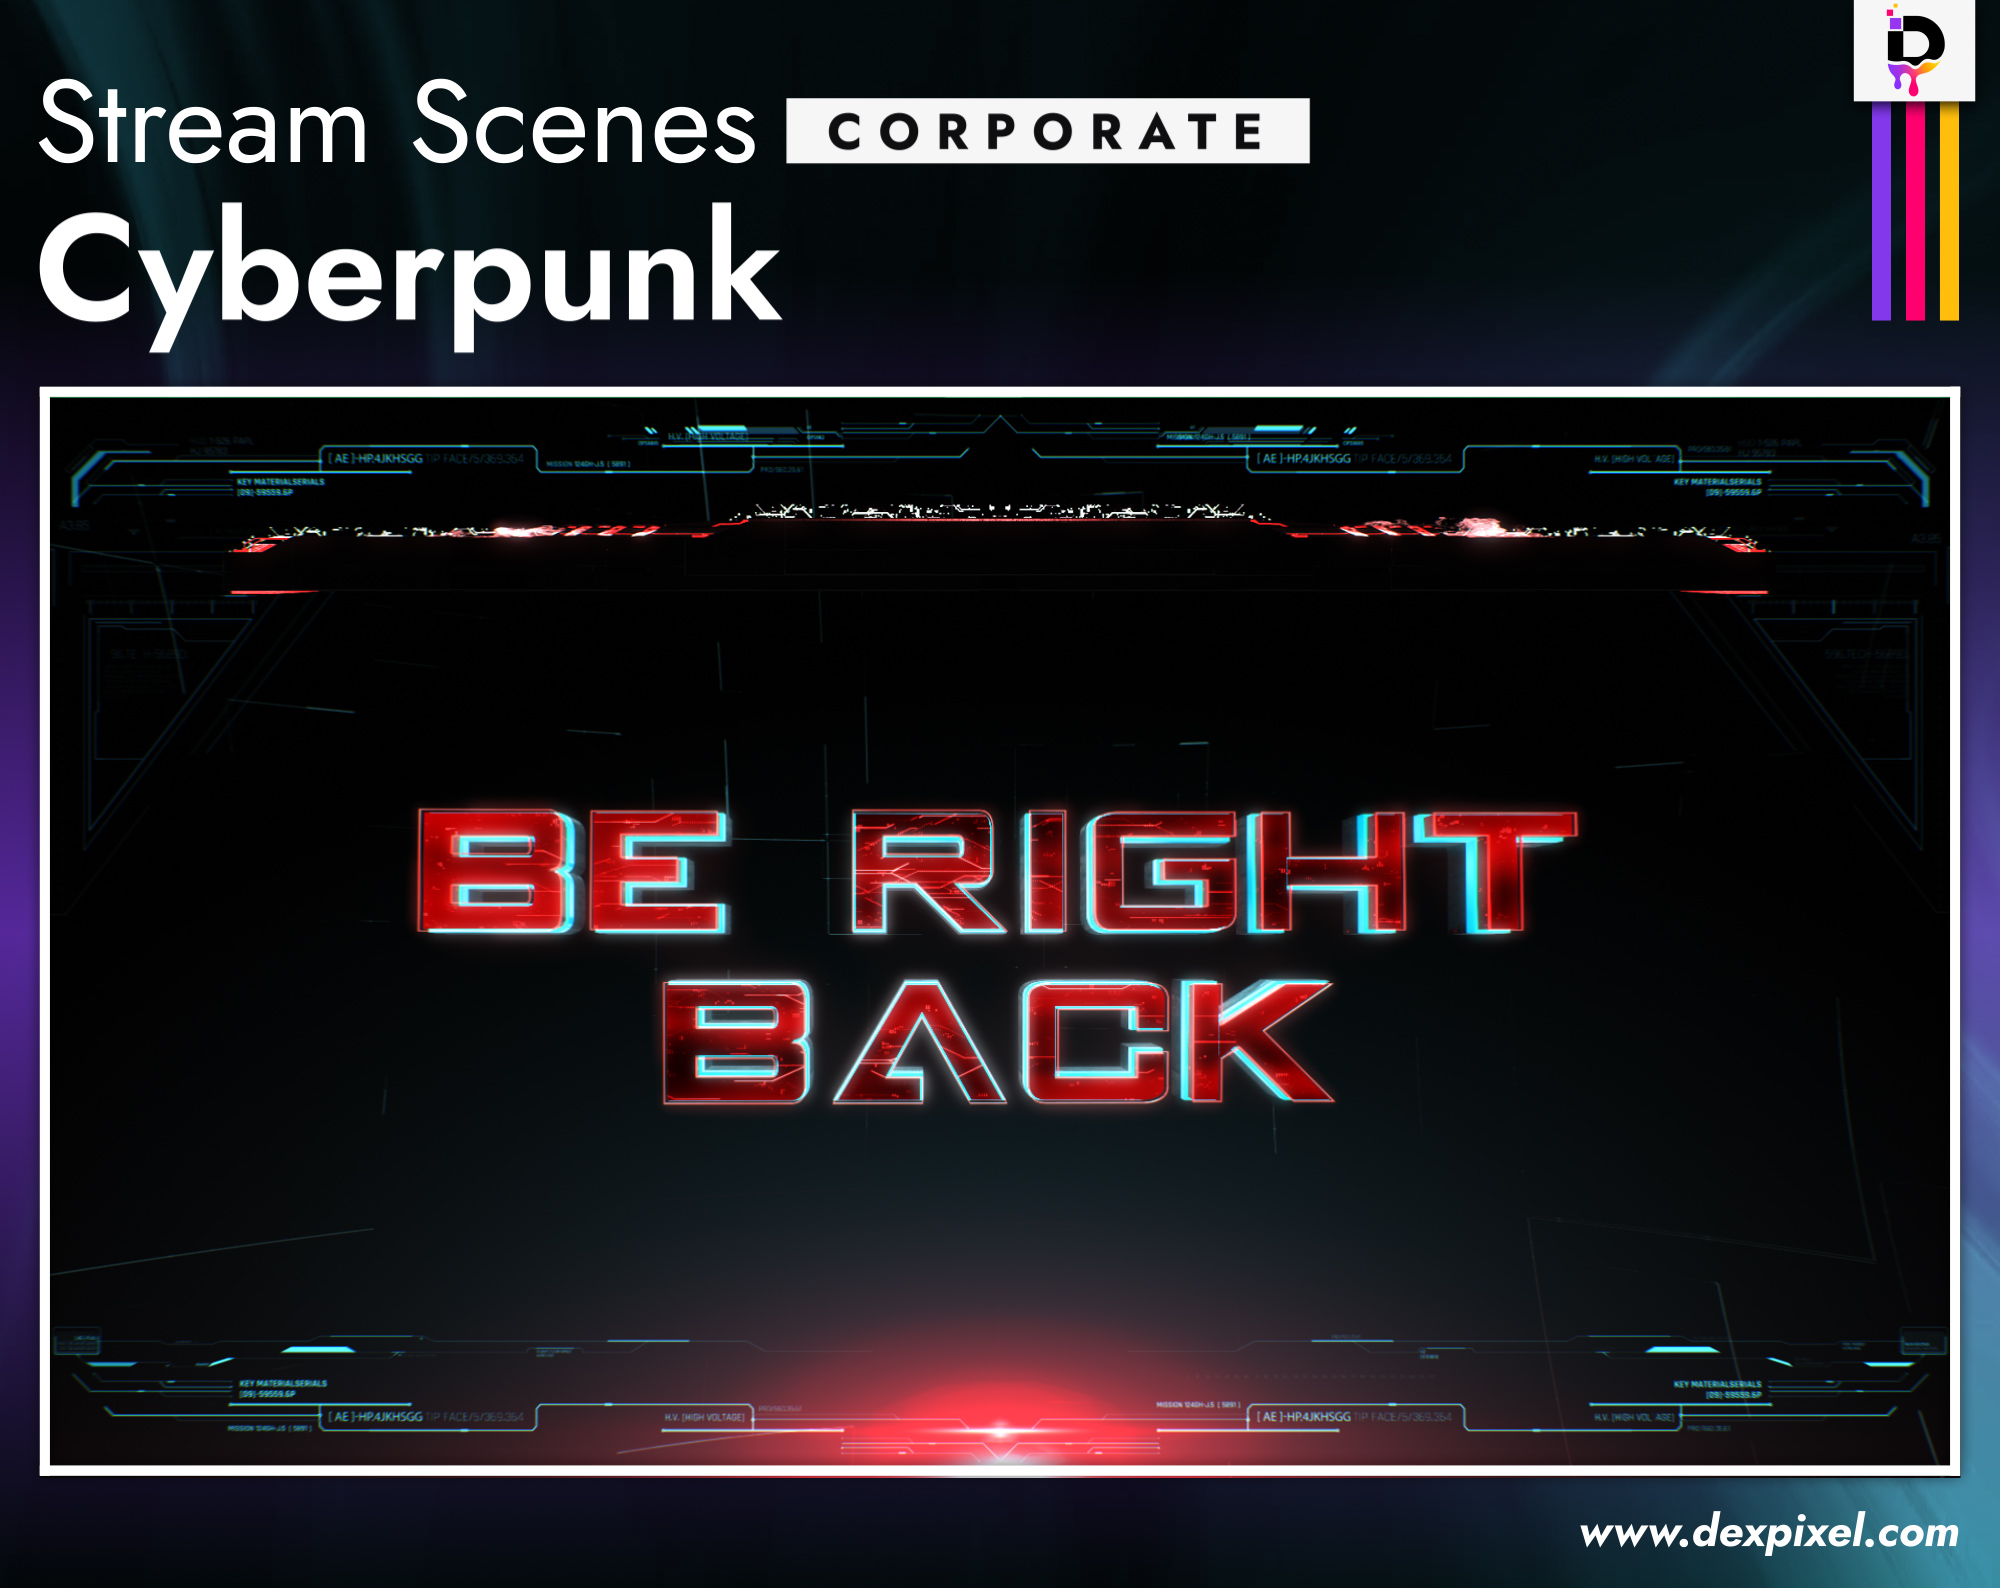 Stream Scenes Dexpixel Cyberpunk Corporate